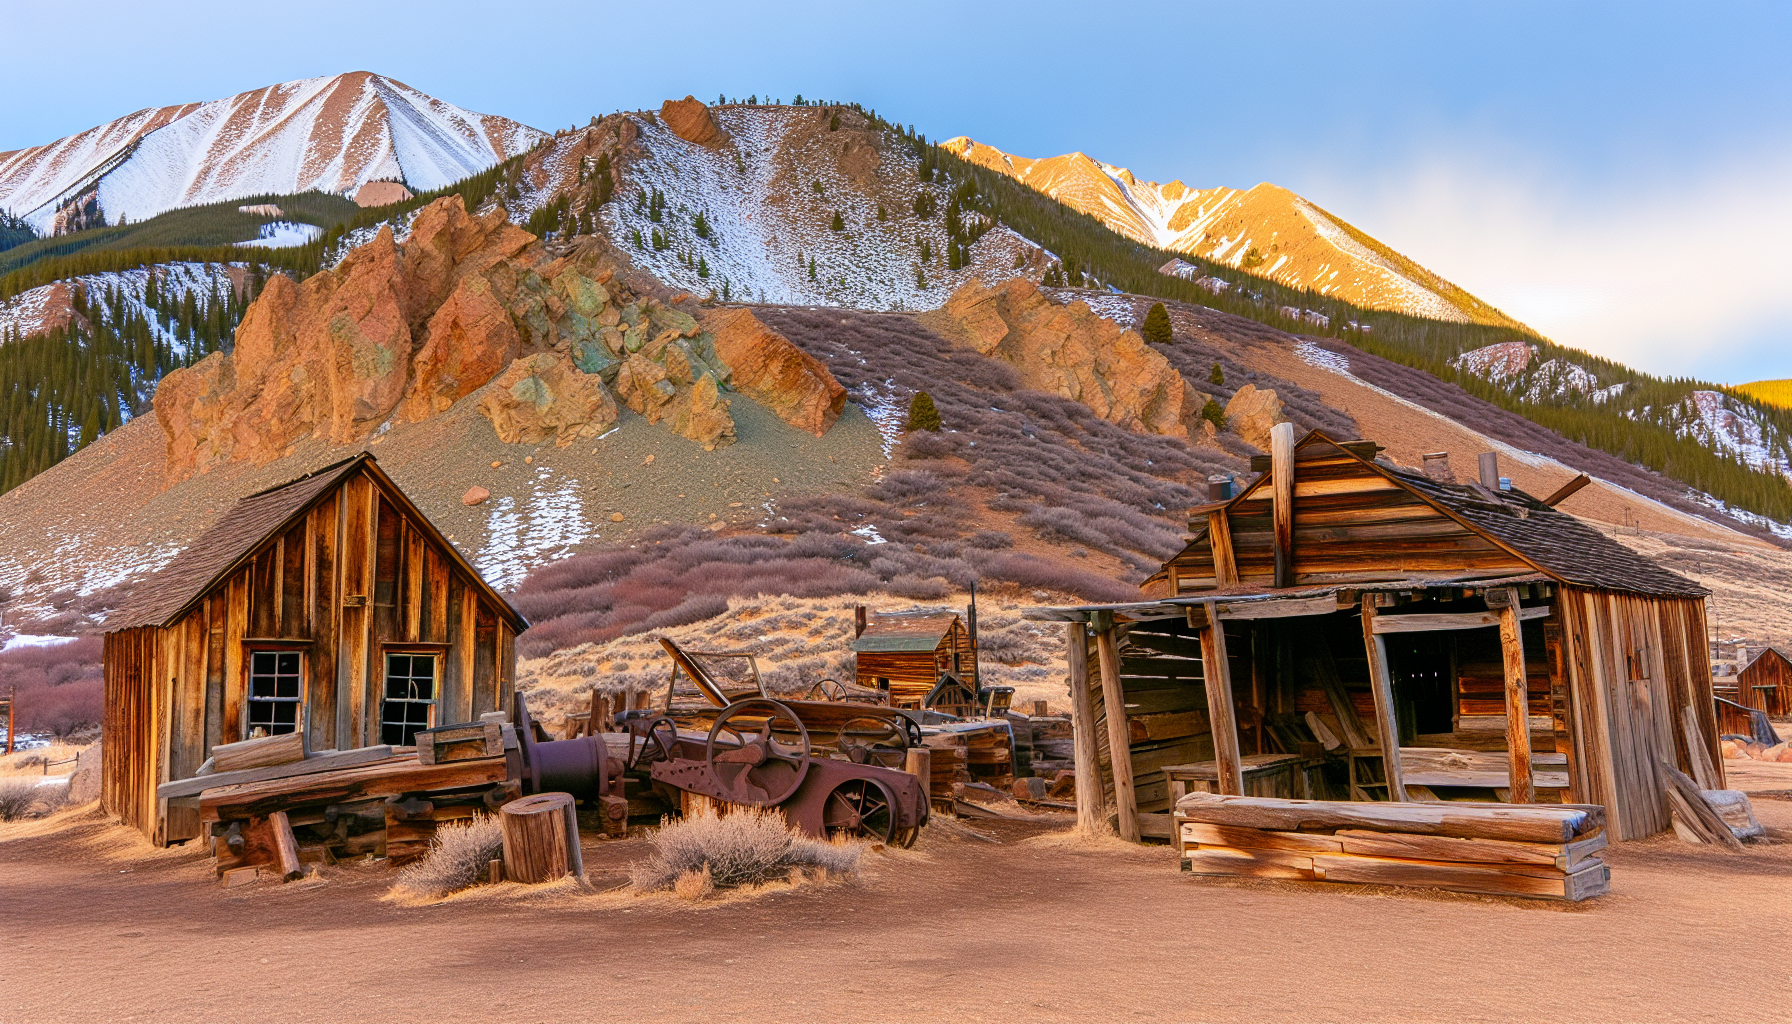 Historic gold mining site in Arvada, Colorado